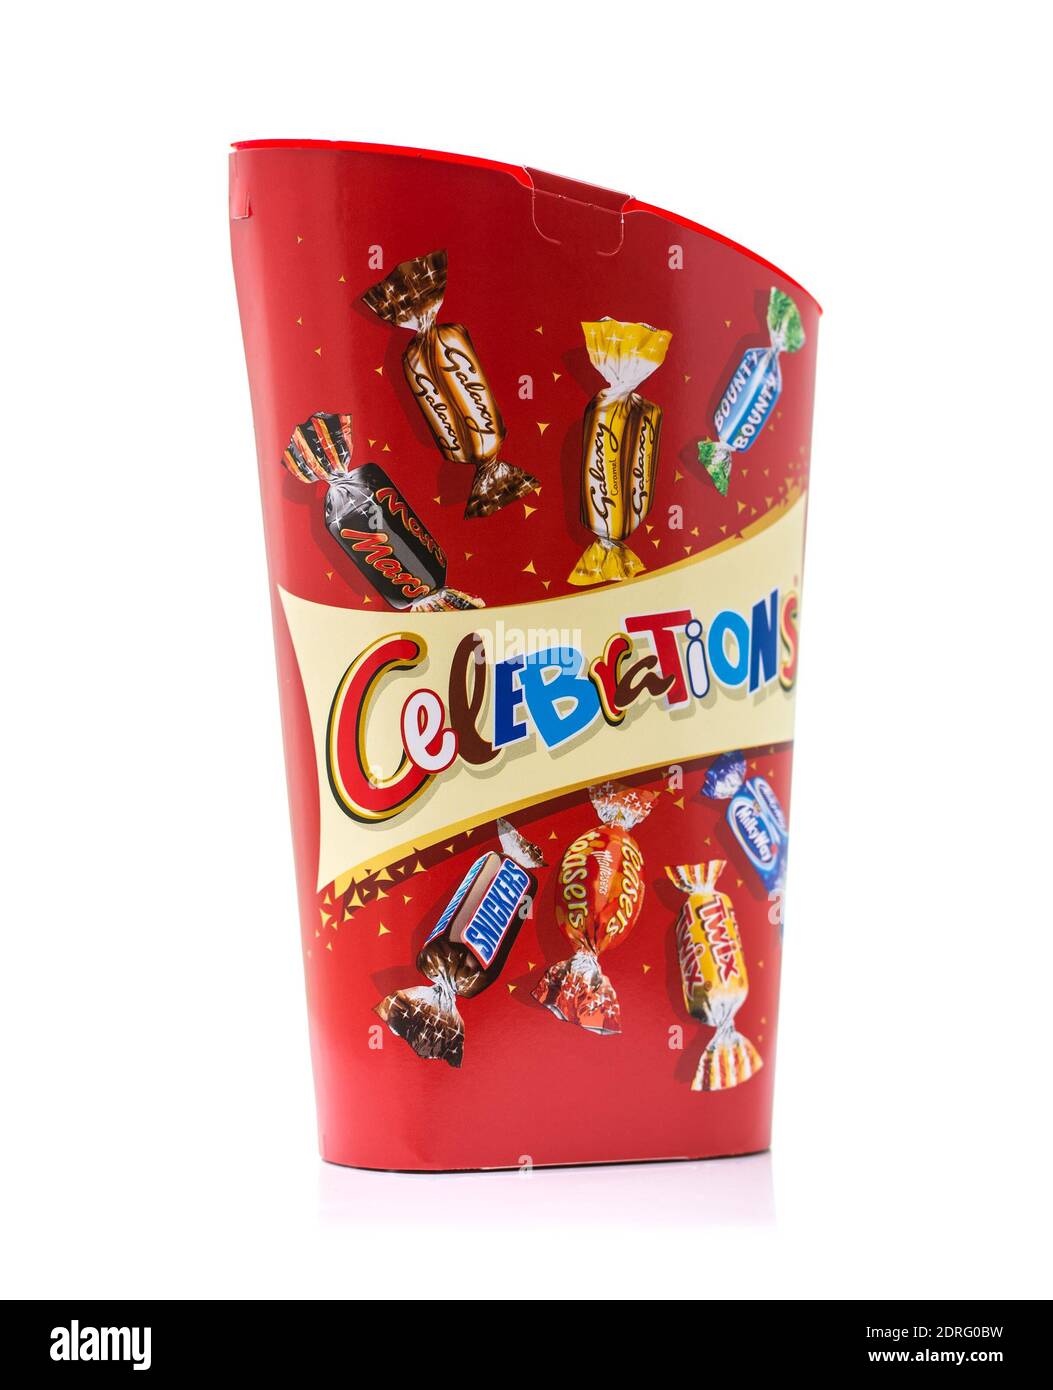 Galaxy Celebrations Chocolate on a white background Stock Photo - Alamy